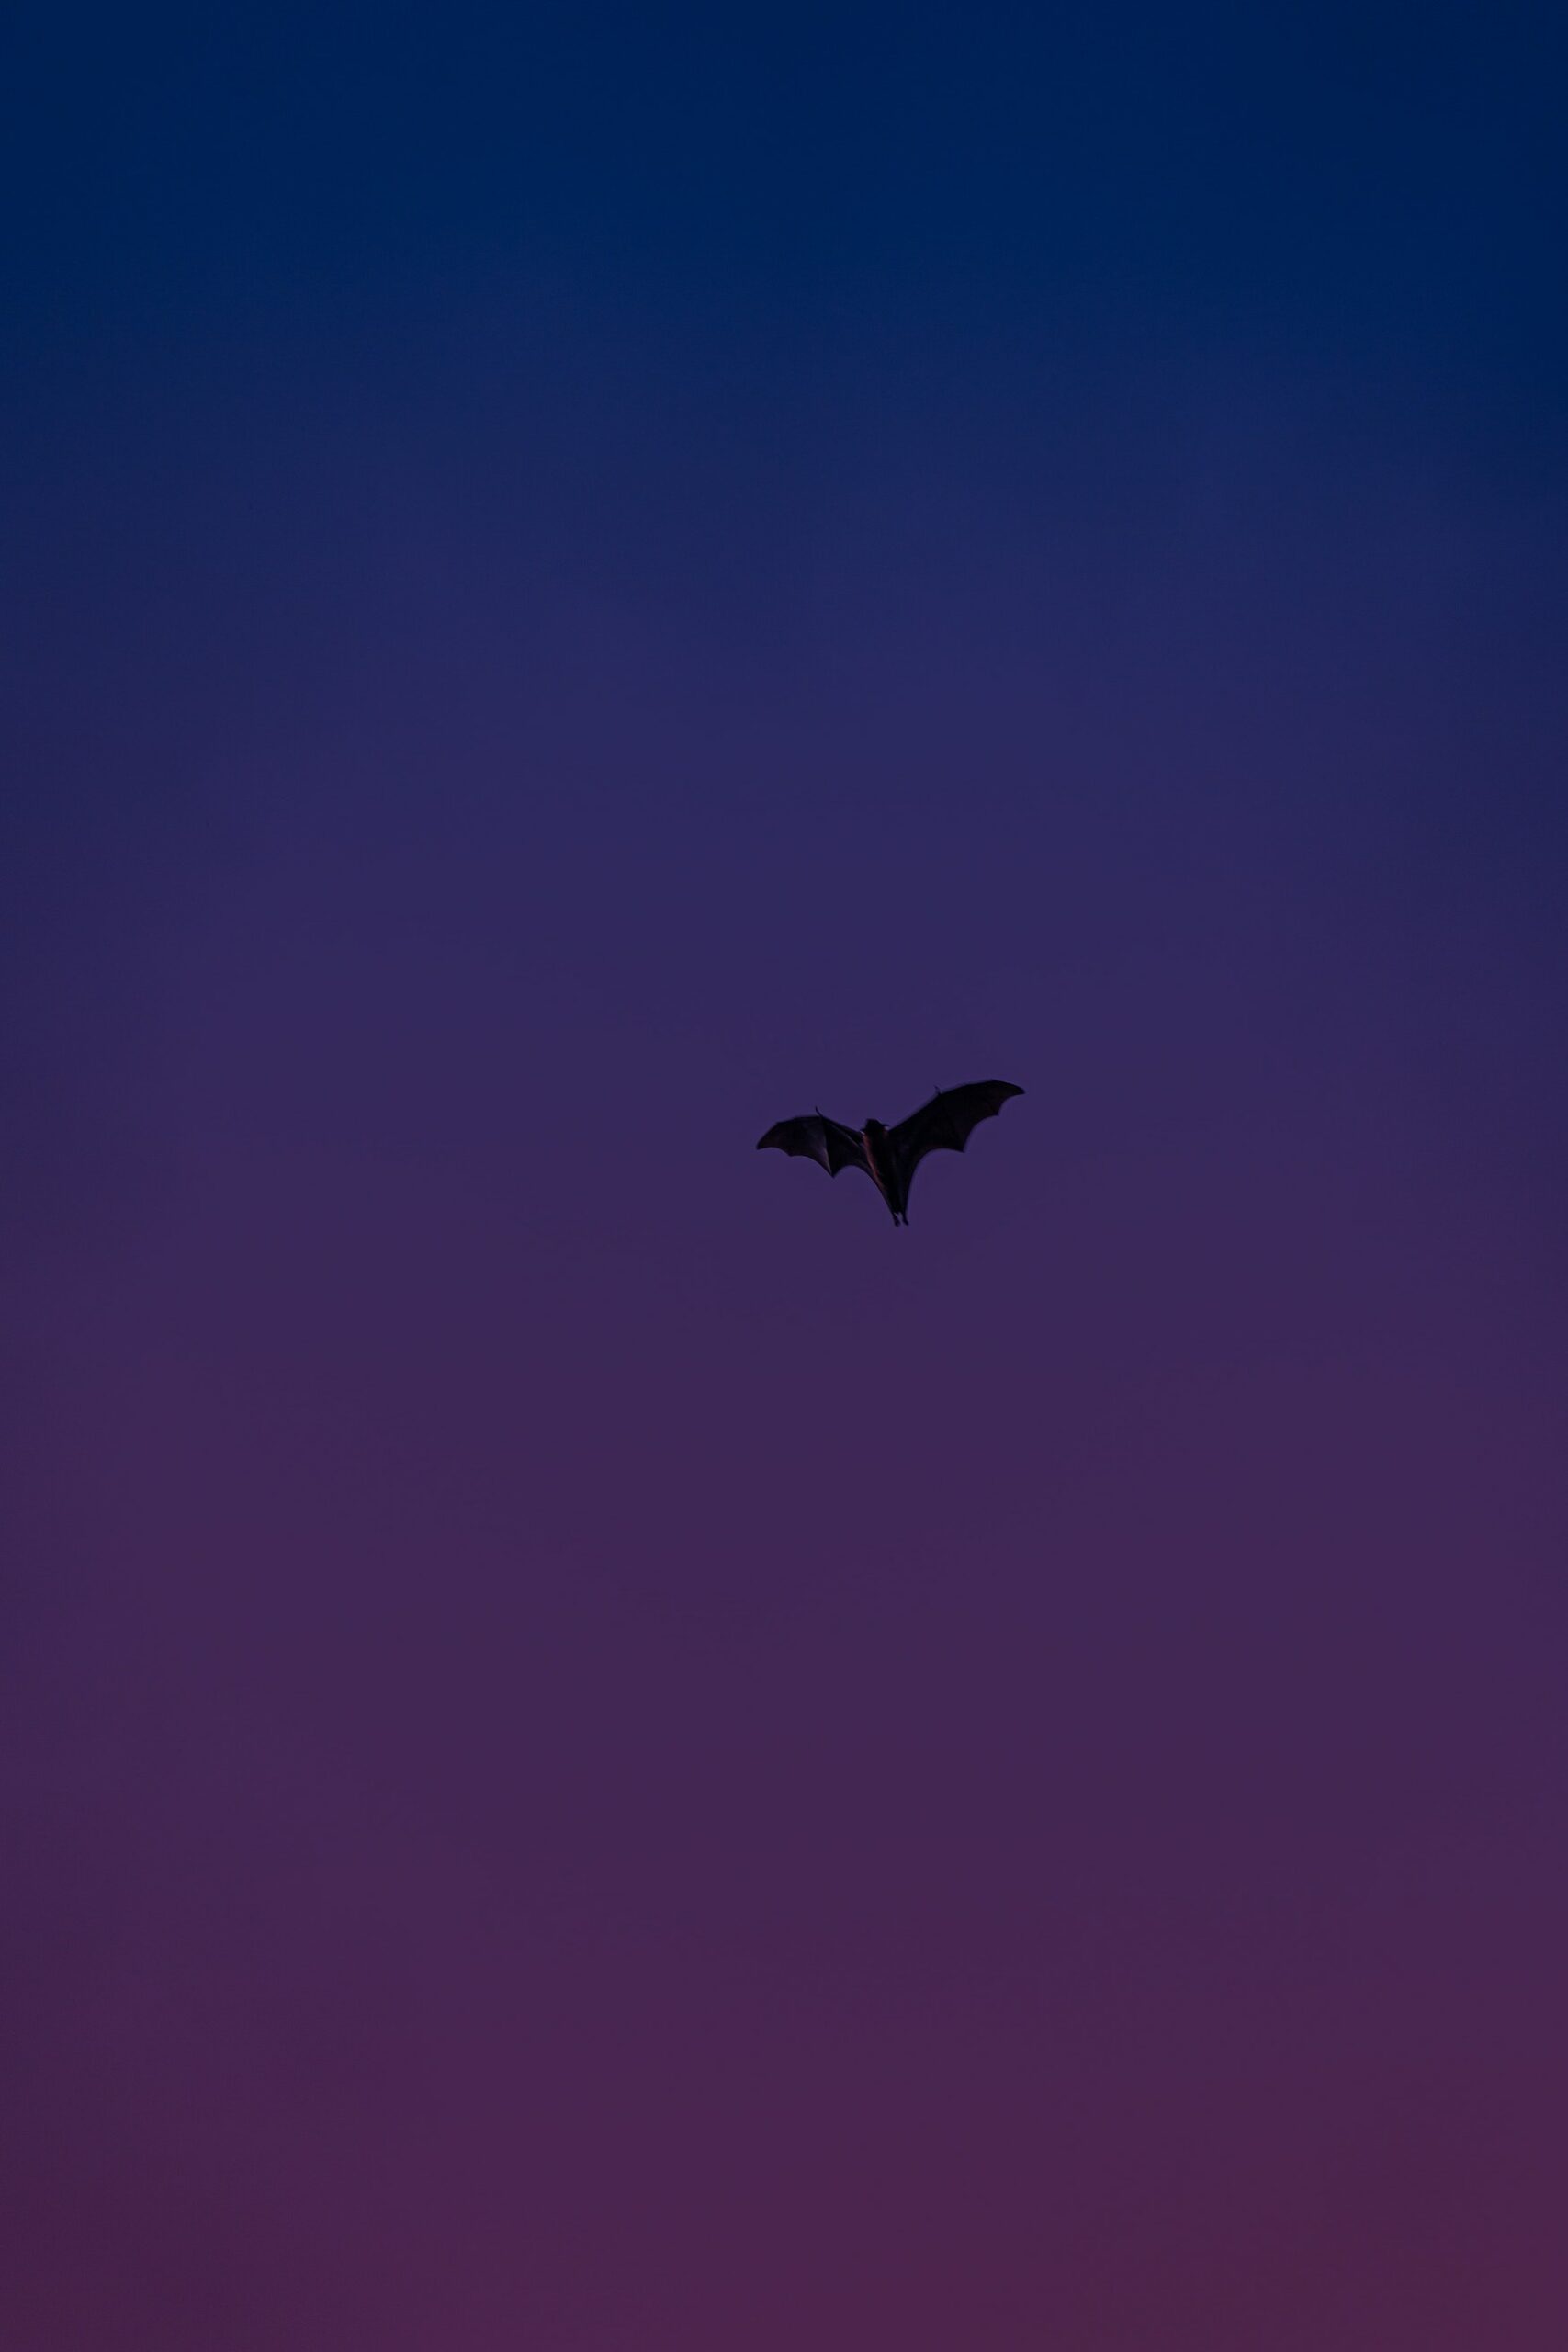 Bat at night sky in Chiemsee-Alpenland region